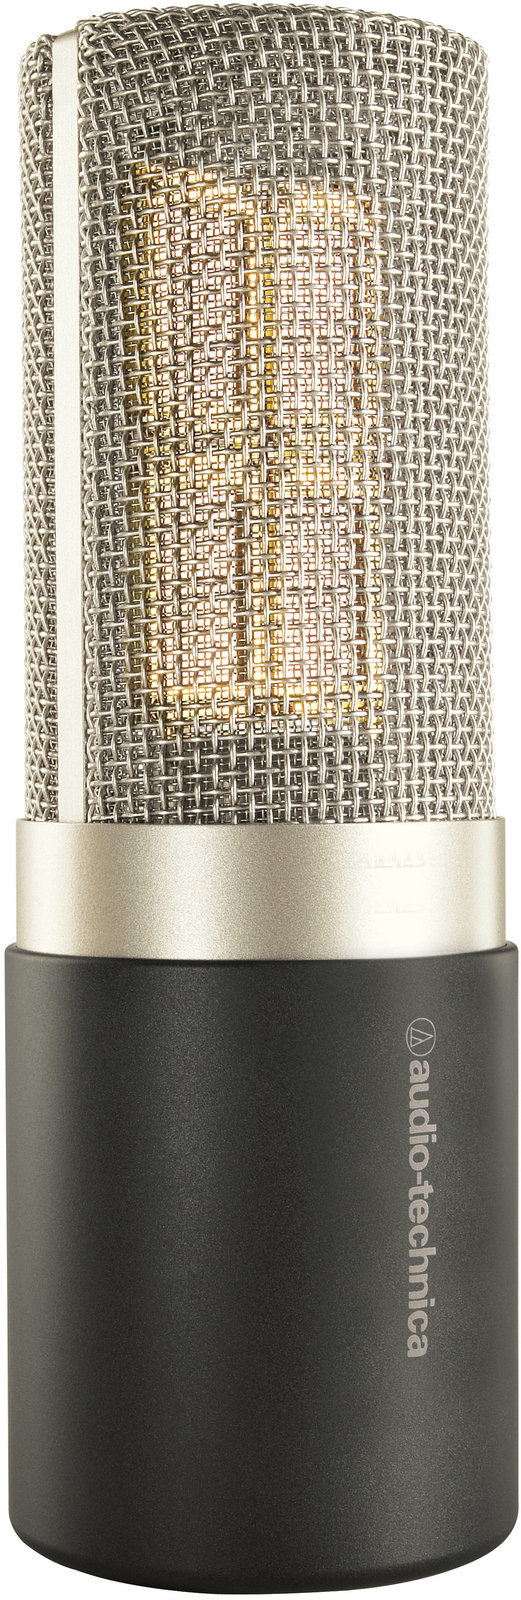 Kondensatormikrofoner för studio Audio-Technica AT5040 Kondensatormikrofoner för studio